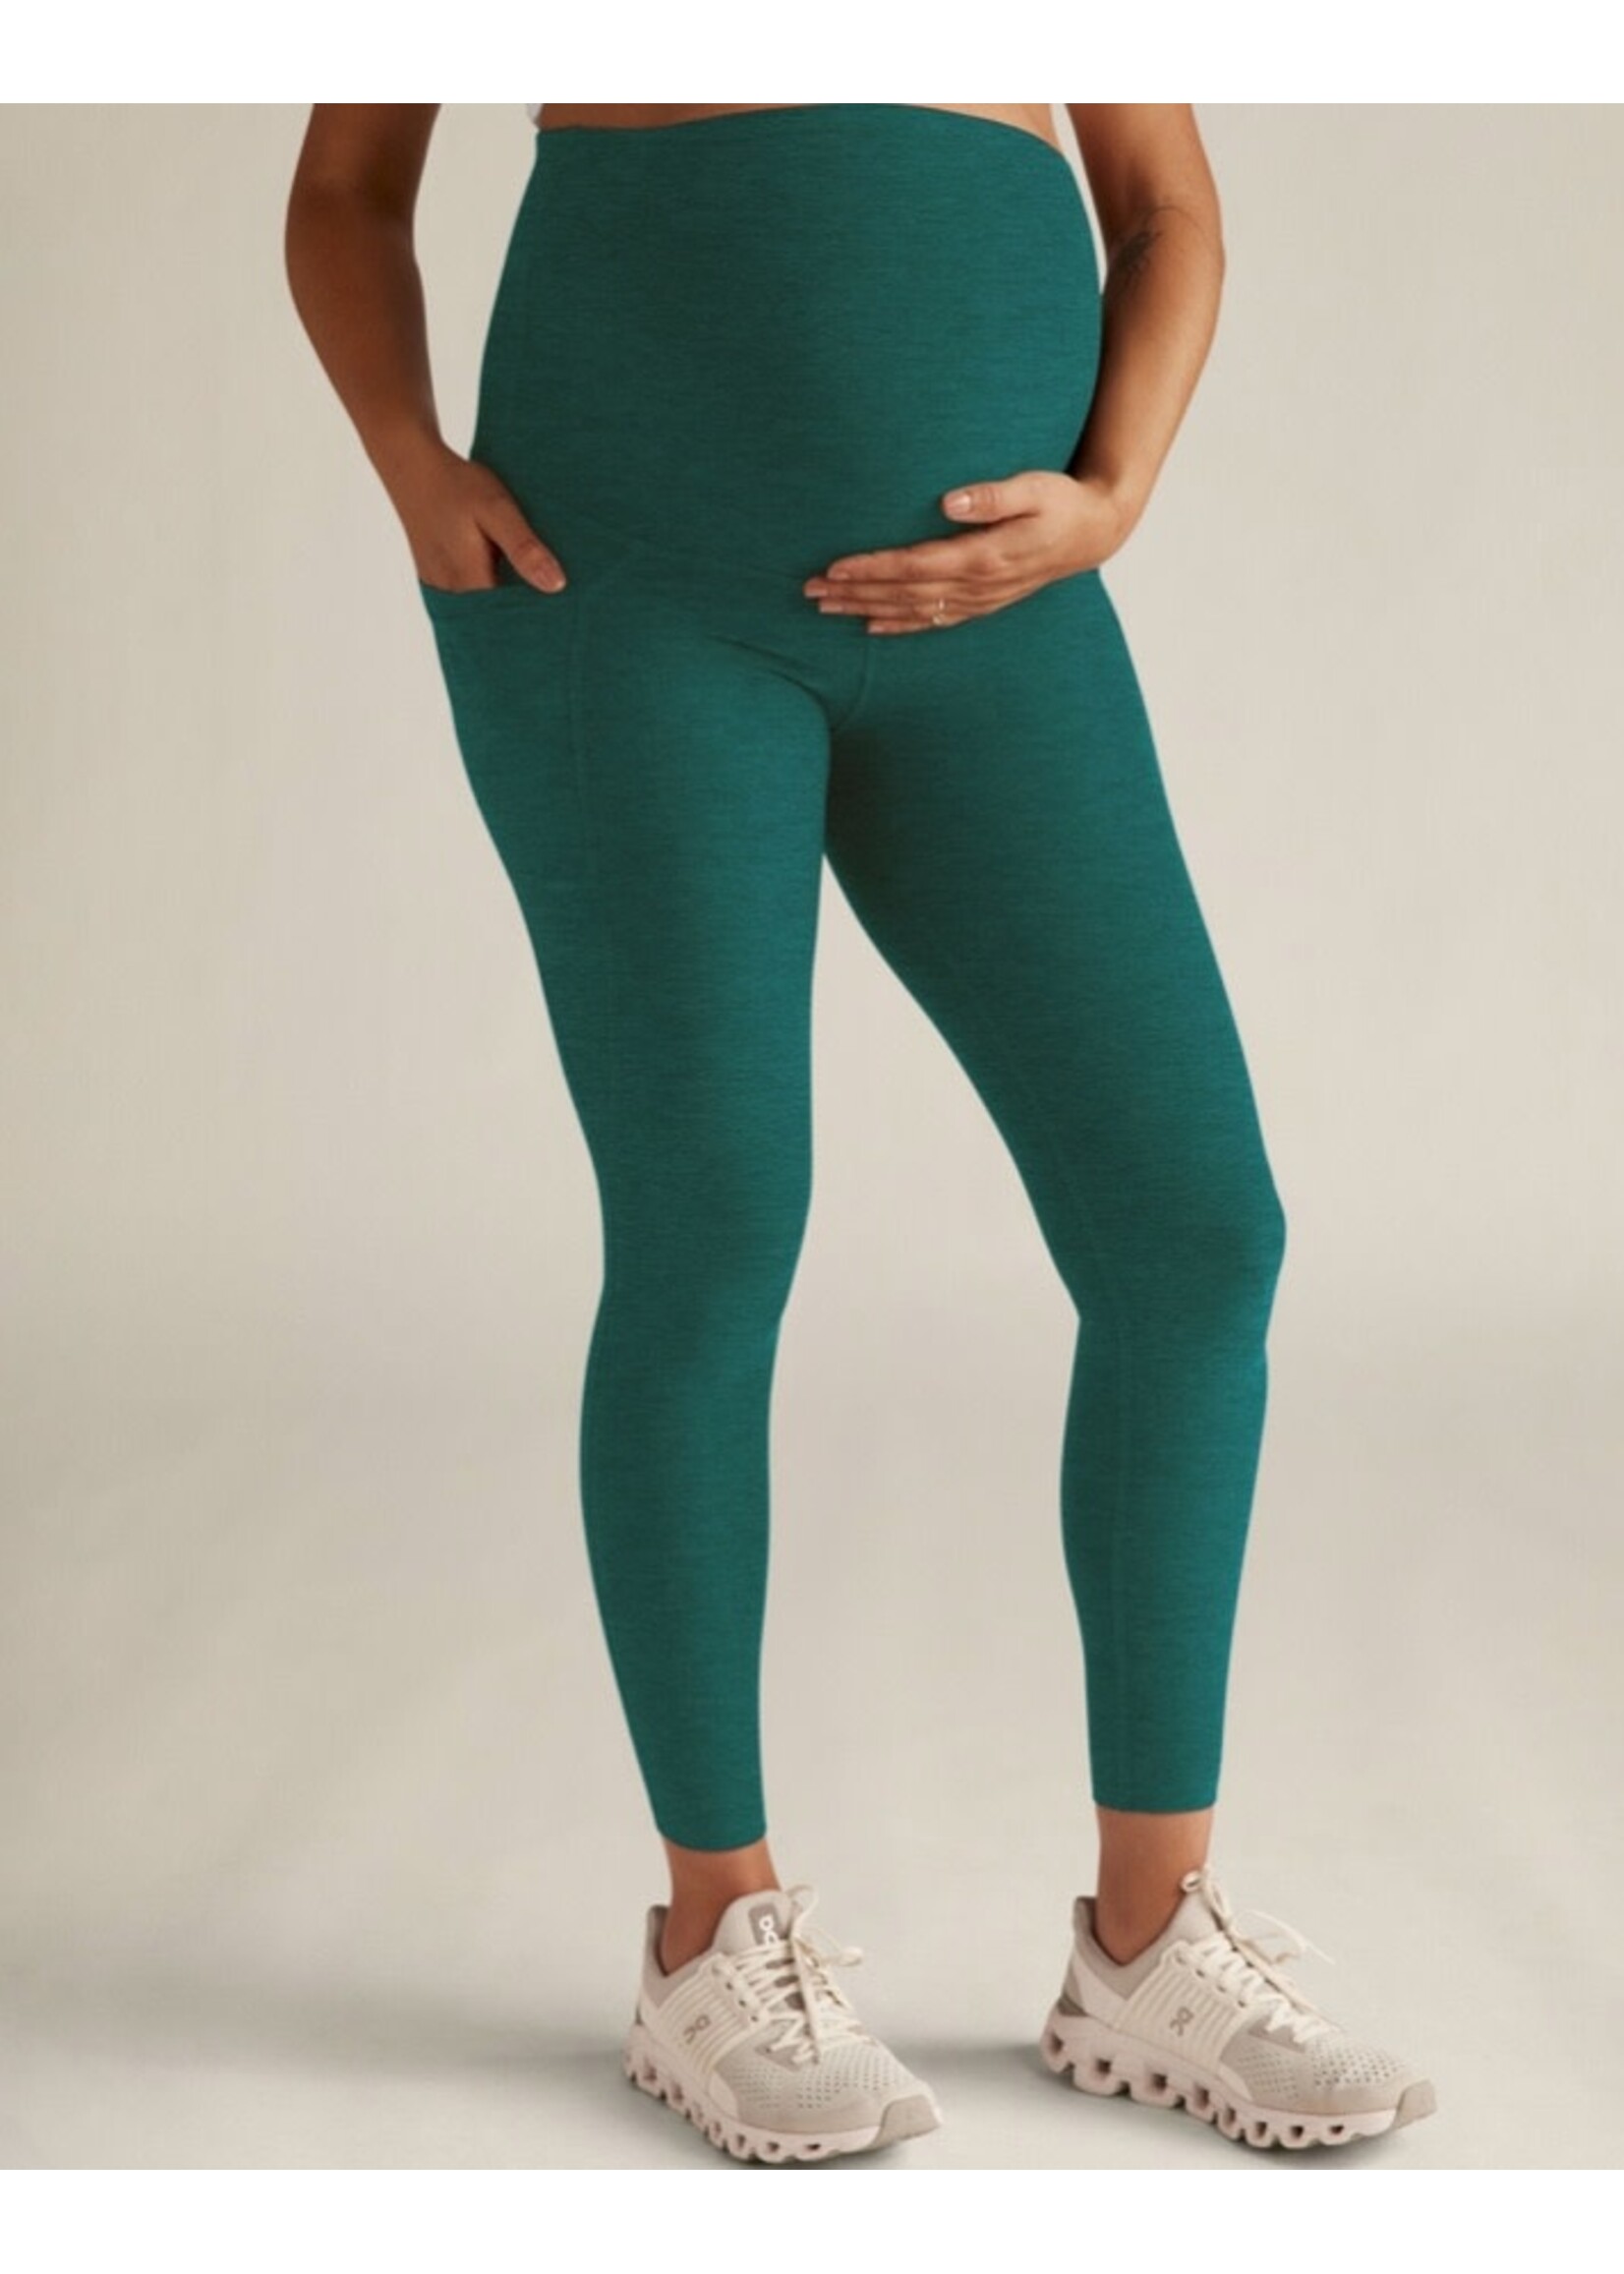 Kayla Itsines - I've been wearing beyond yoga maternity leggings